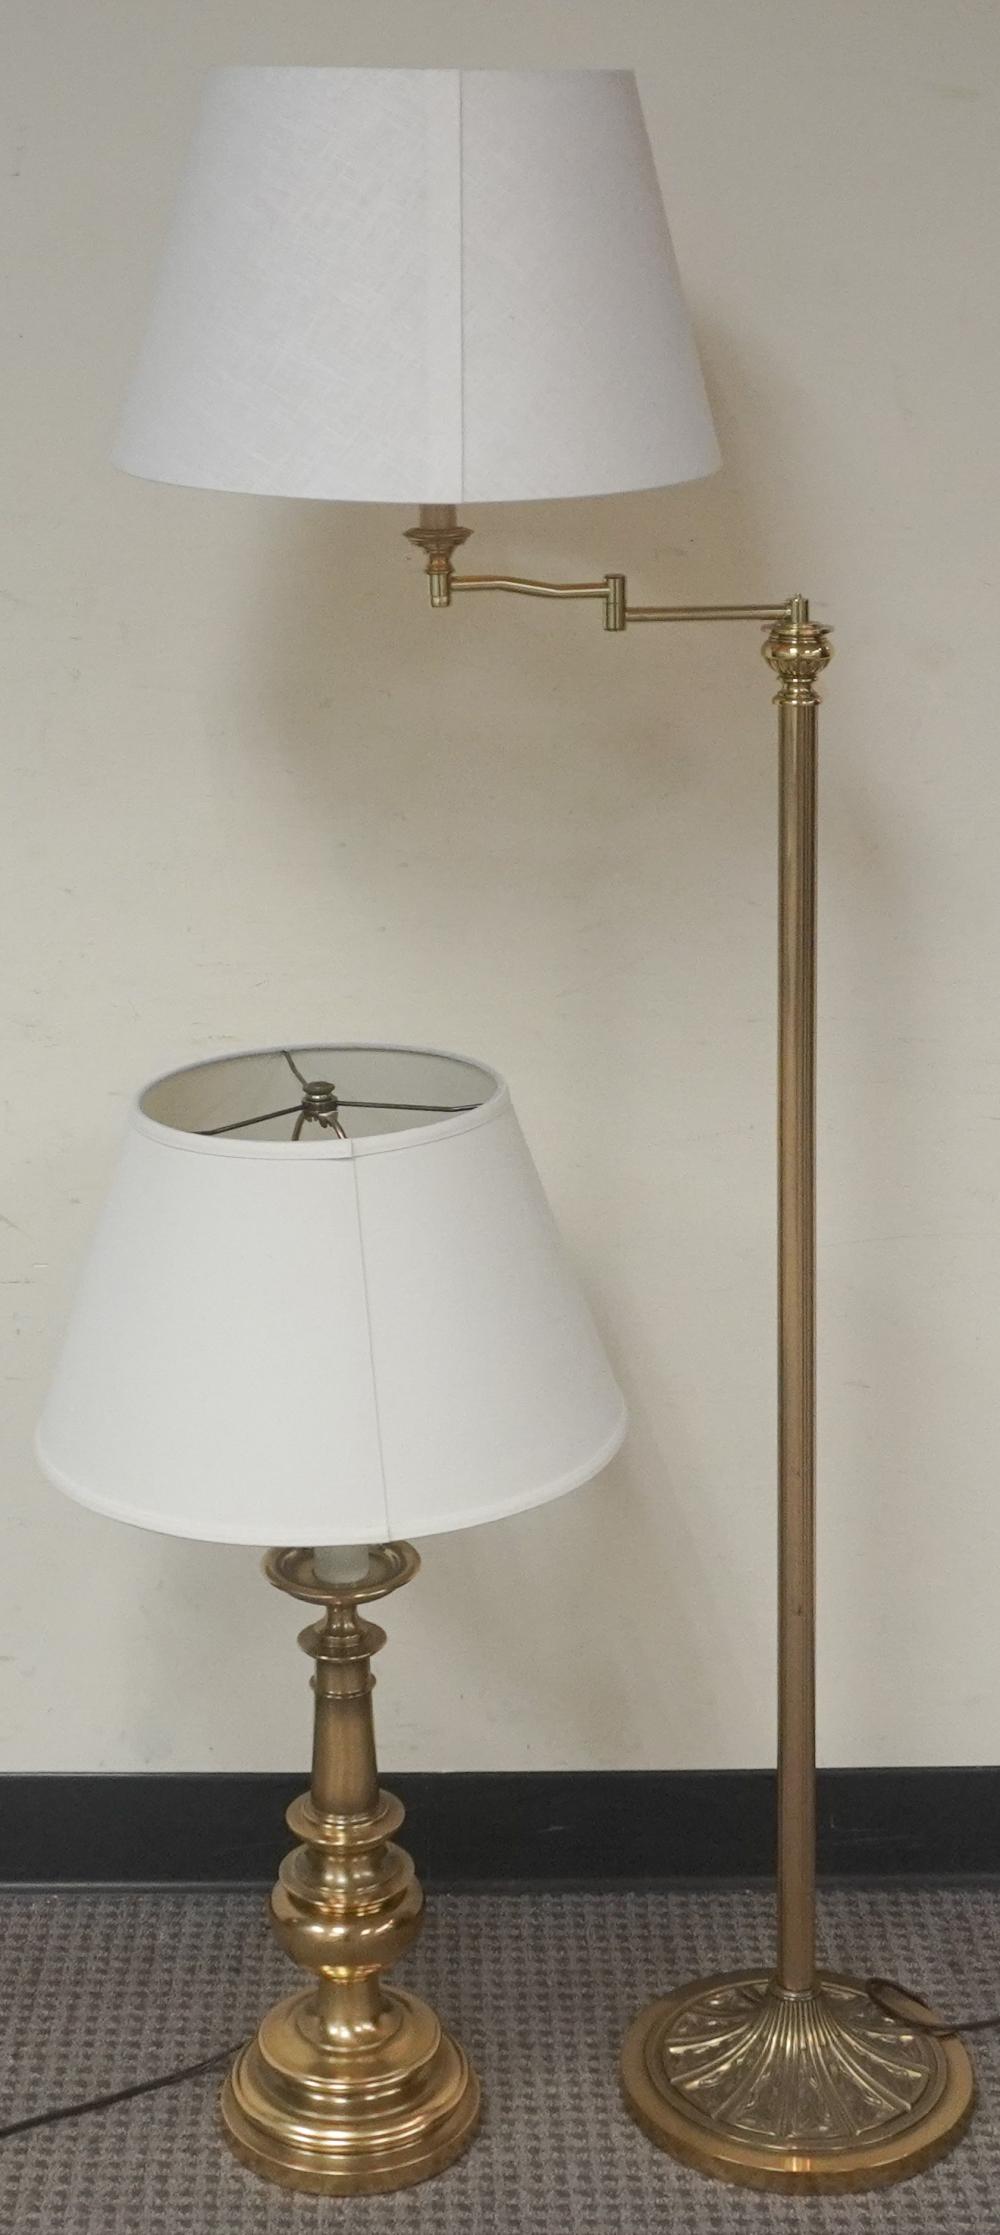 STIFFEL BRASS FLOOR LAMP AND TABLE LAMPStiffel